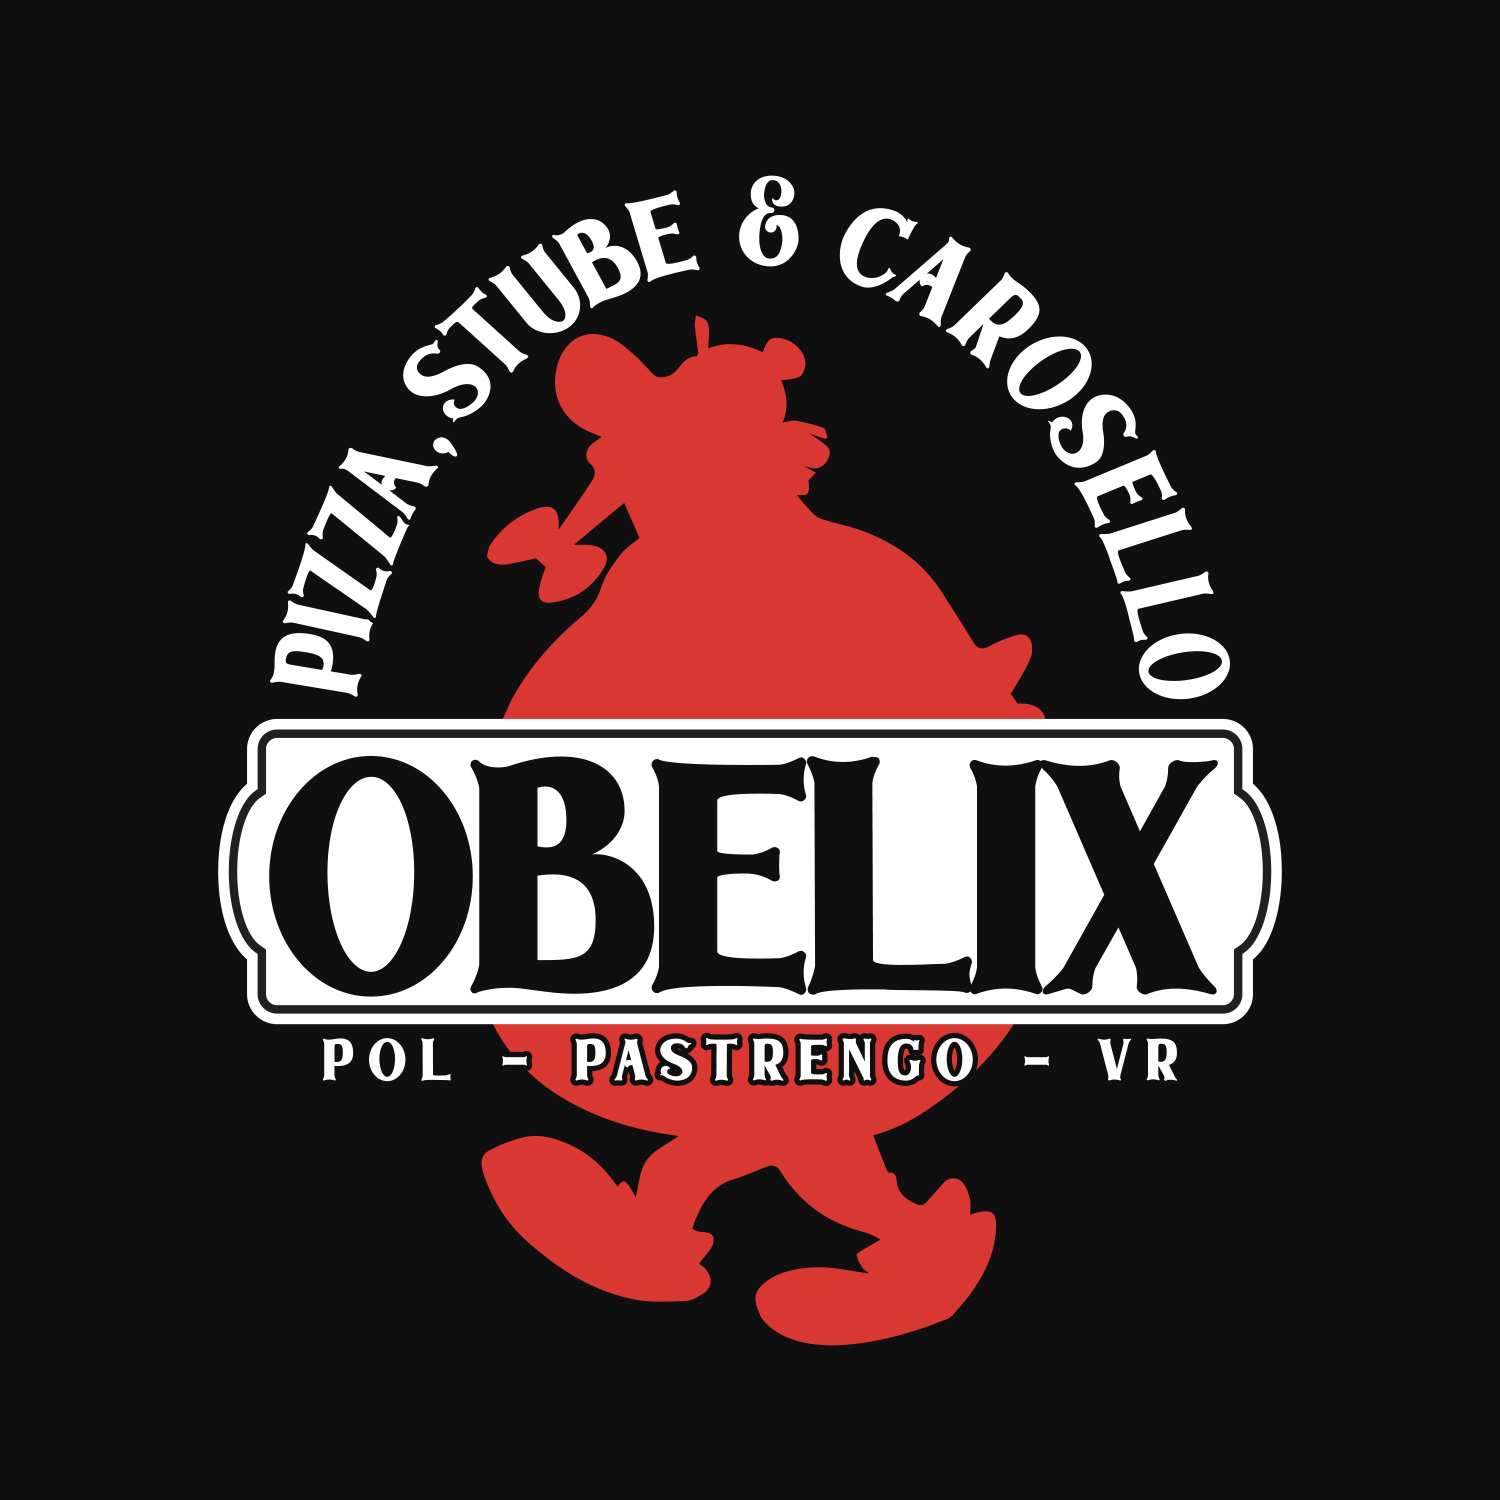 obelix_pizza_stube_carosello